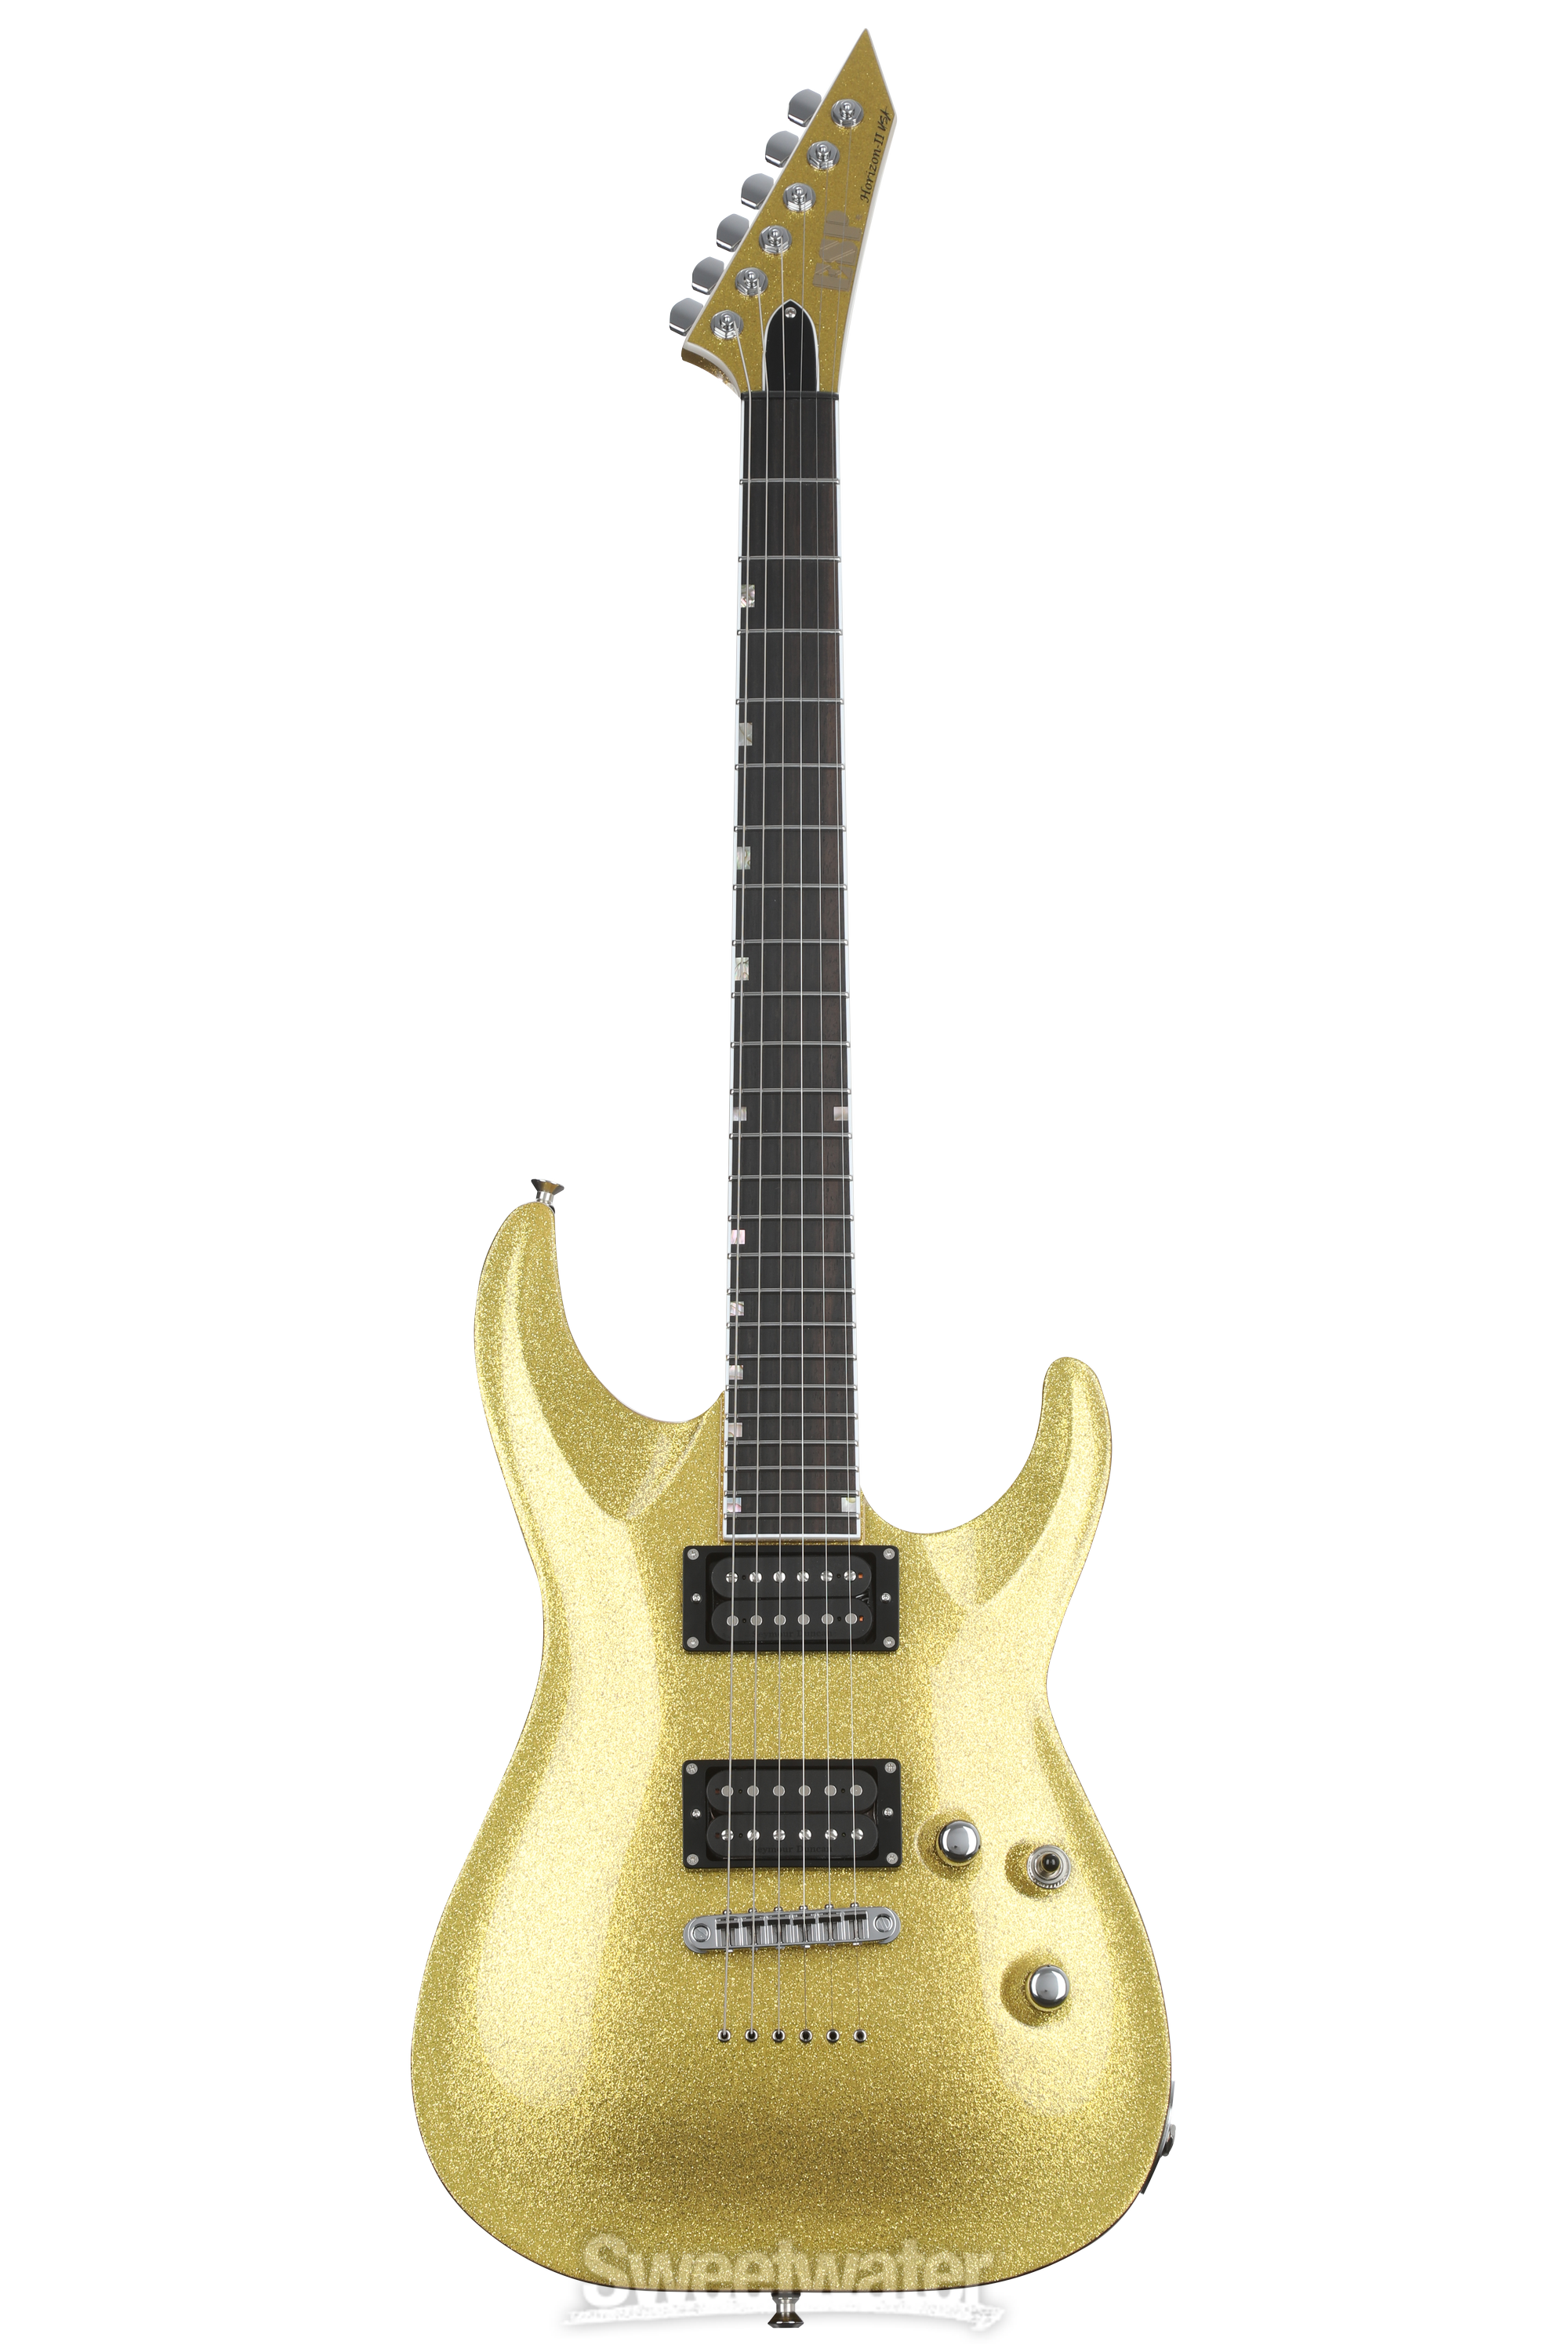 ESP USA Horizon-II Electric Guitar - Gold Sparkle